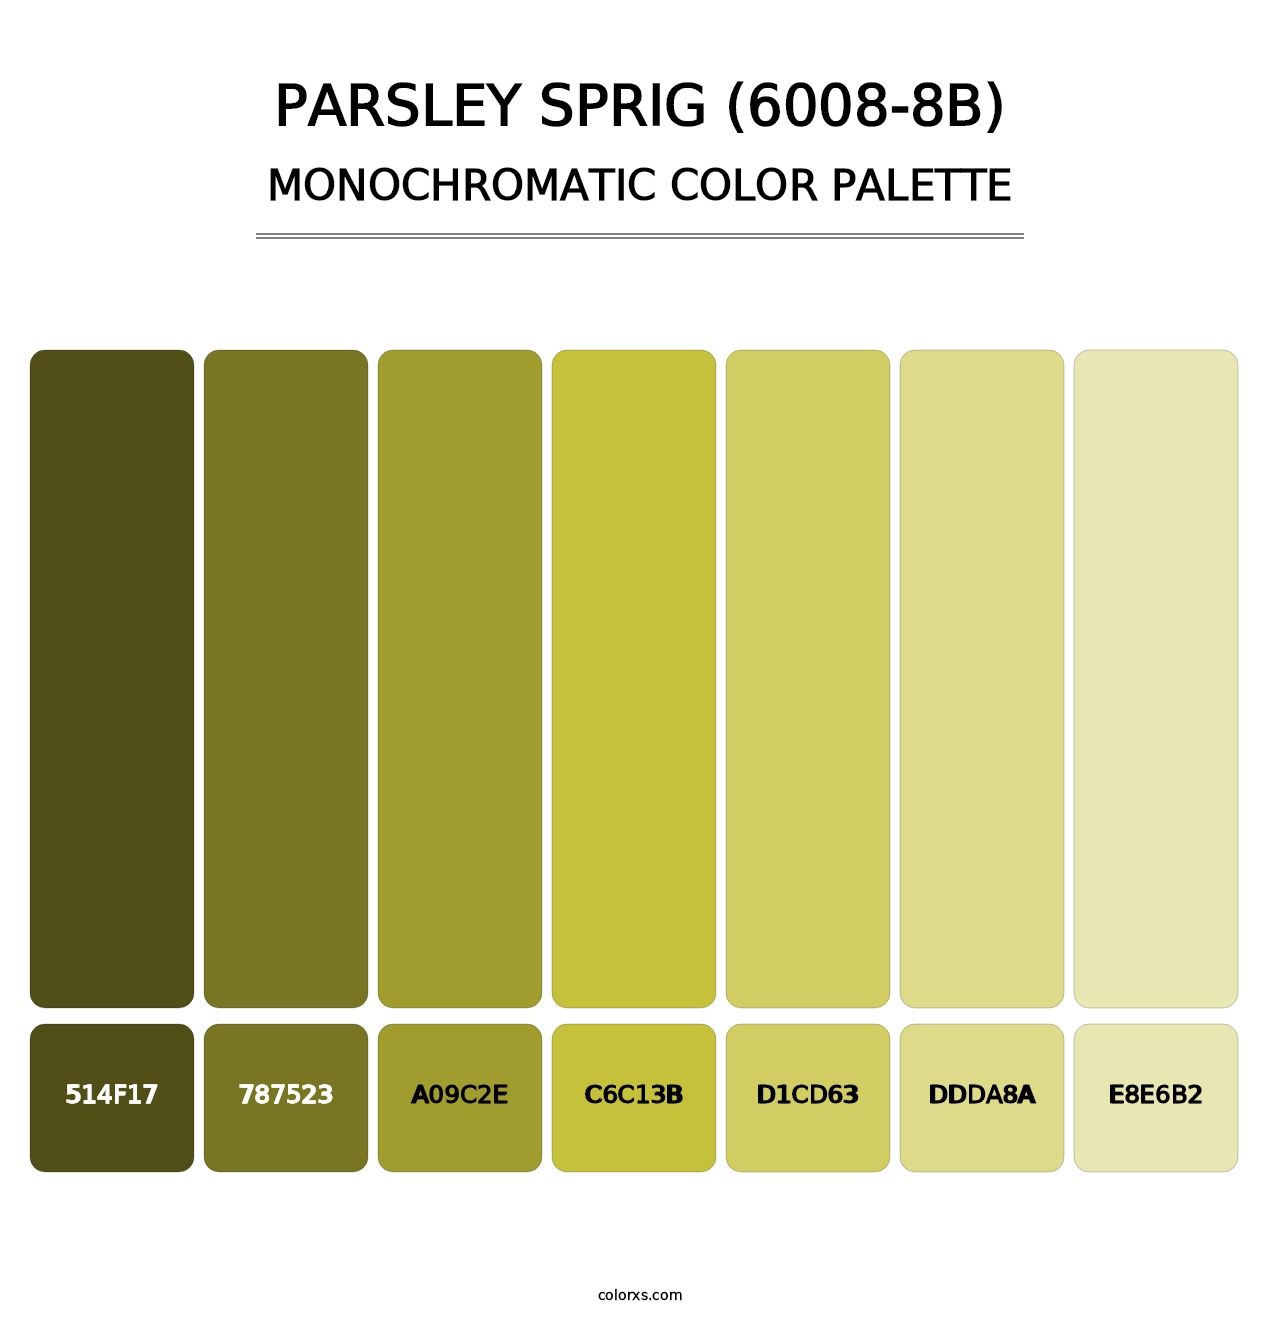 Parsley Sprig (6008-8B) - Monochromatic Color Palette